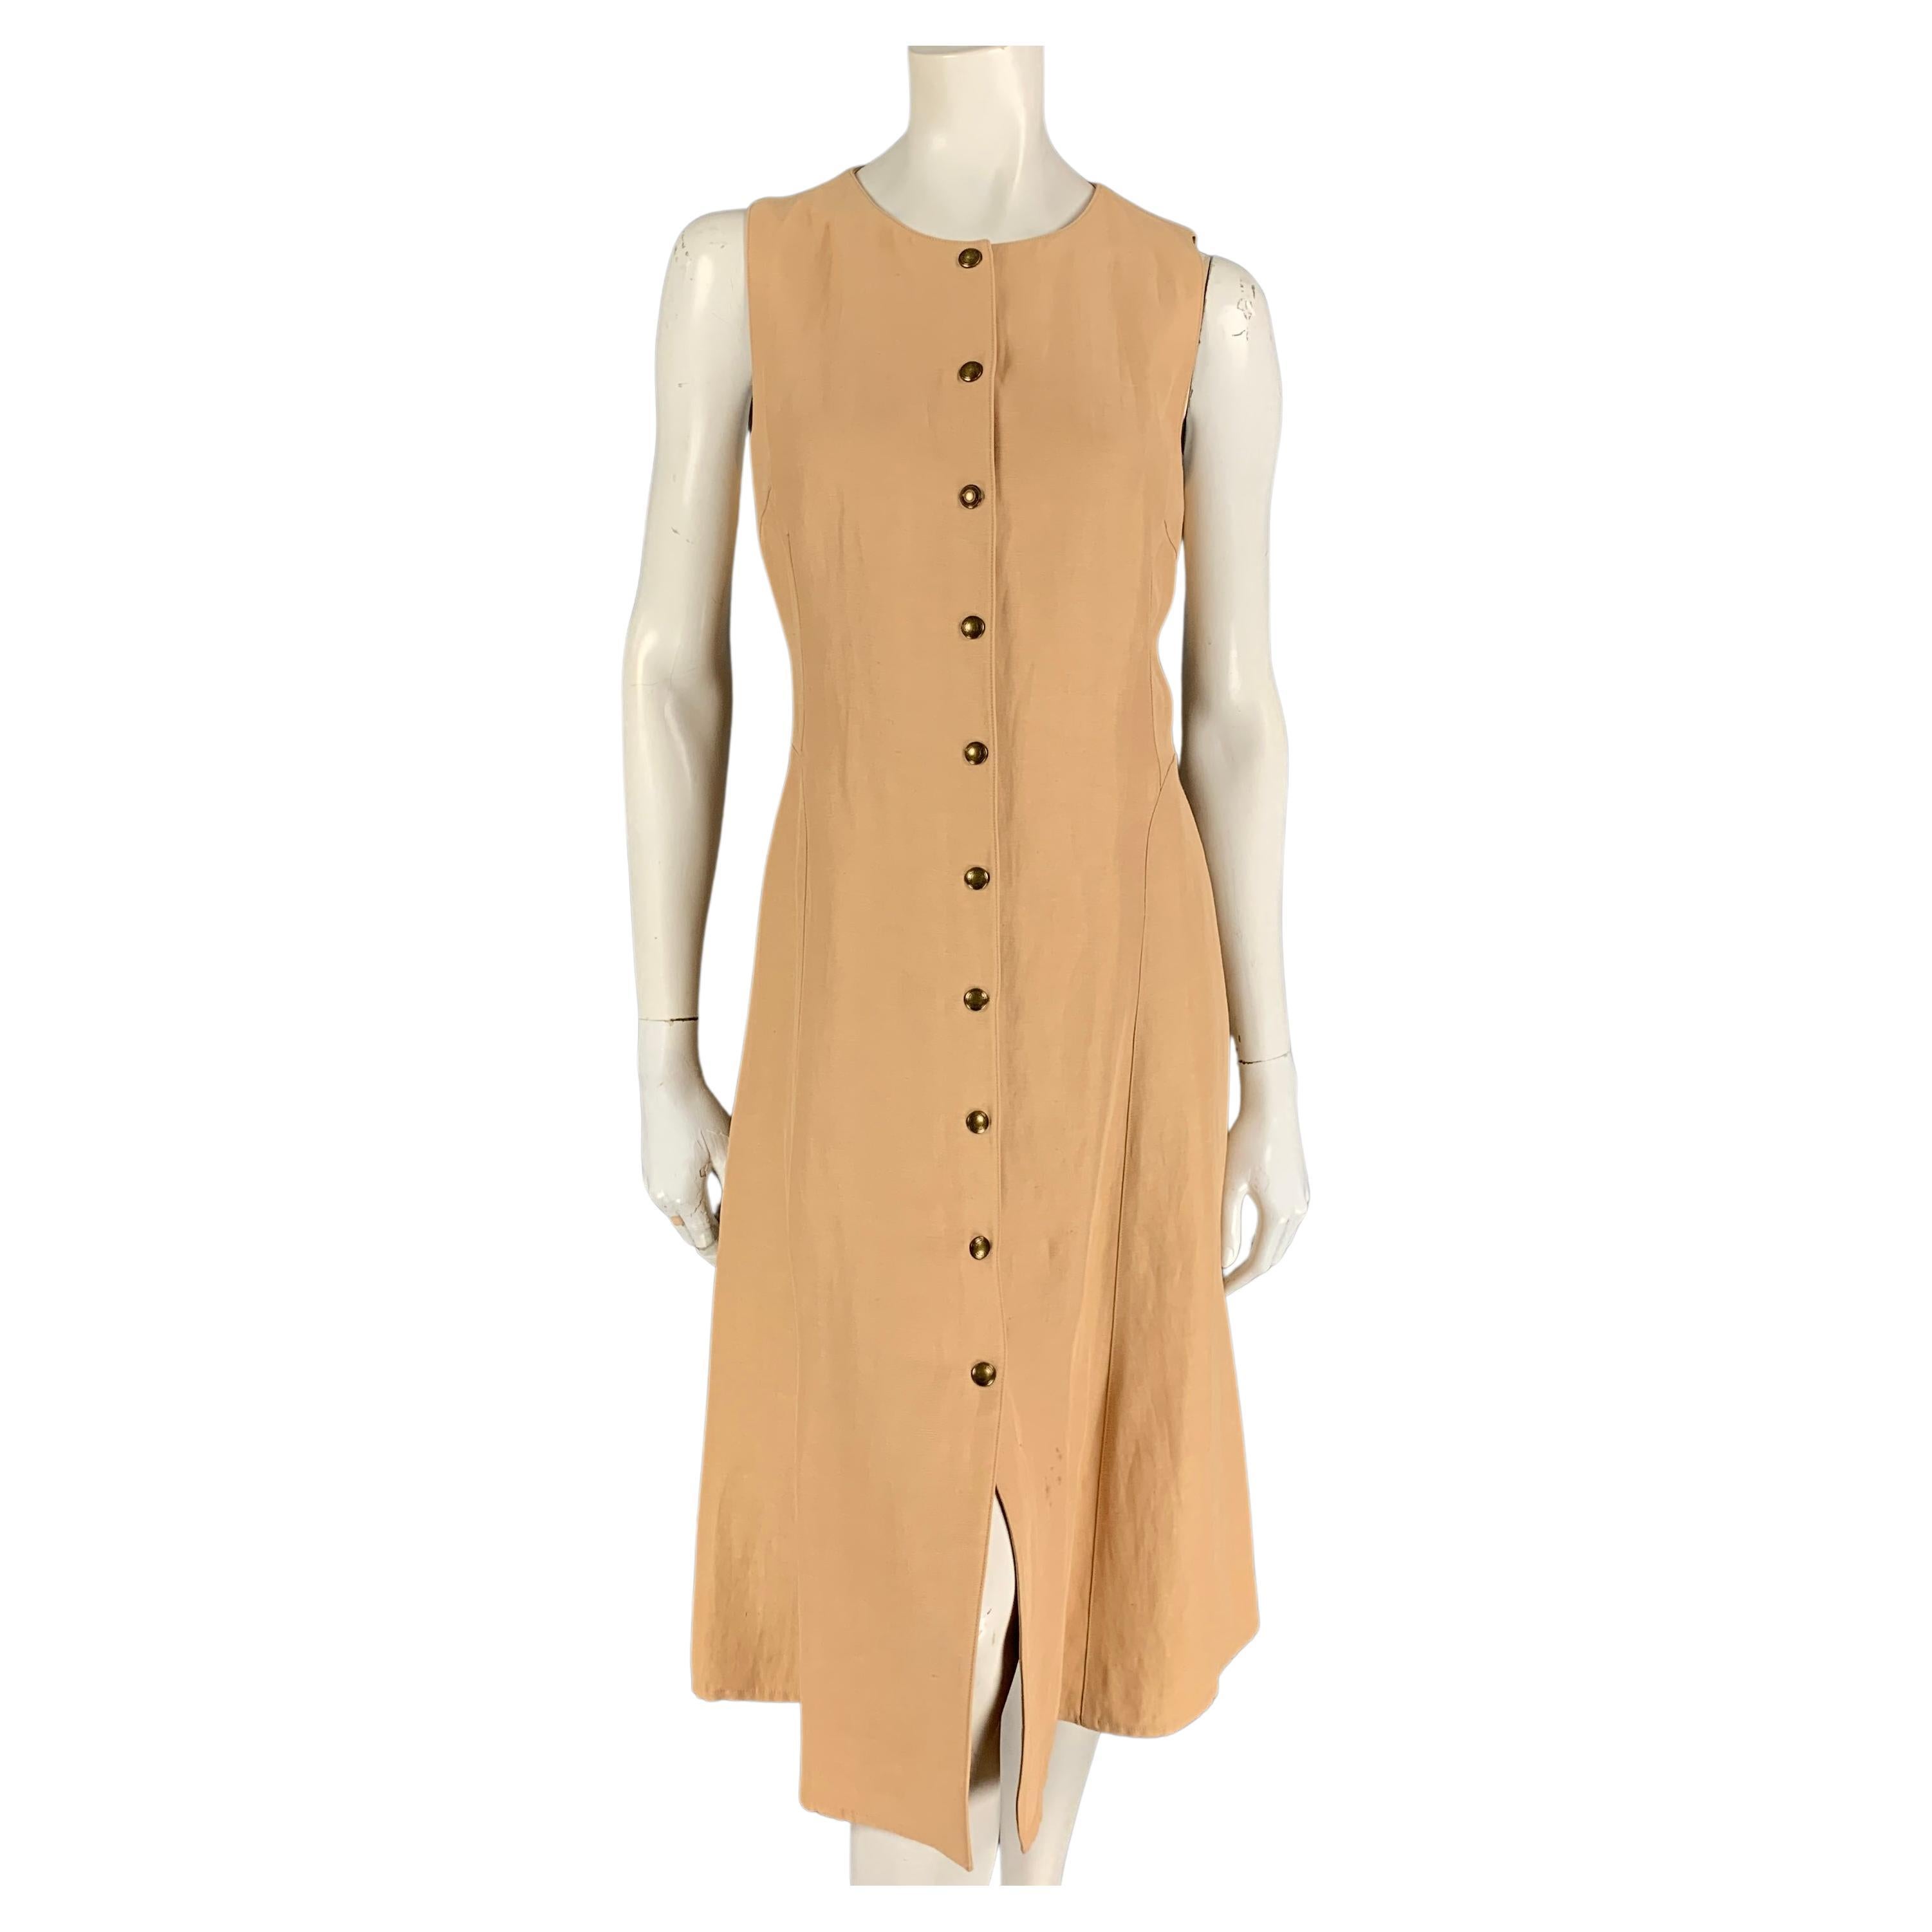 RALPH LAUREN Collection Size 8 Beige Acetate Blend Snaps Dress